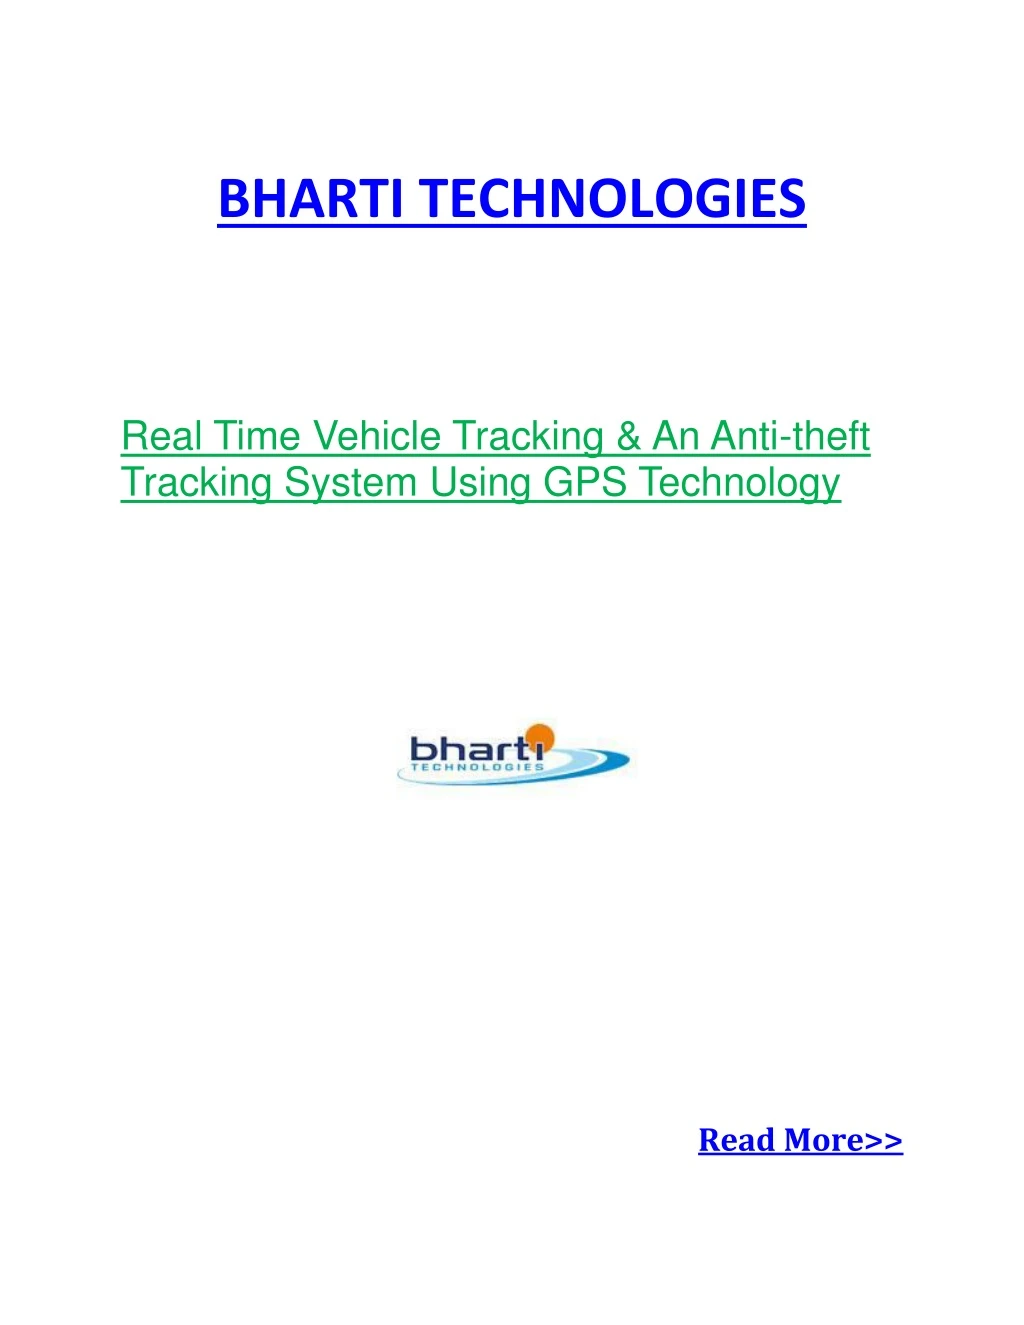 bharti technologies